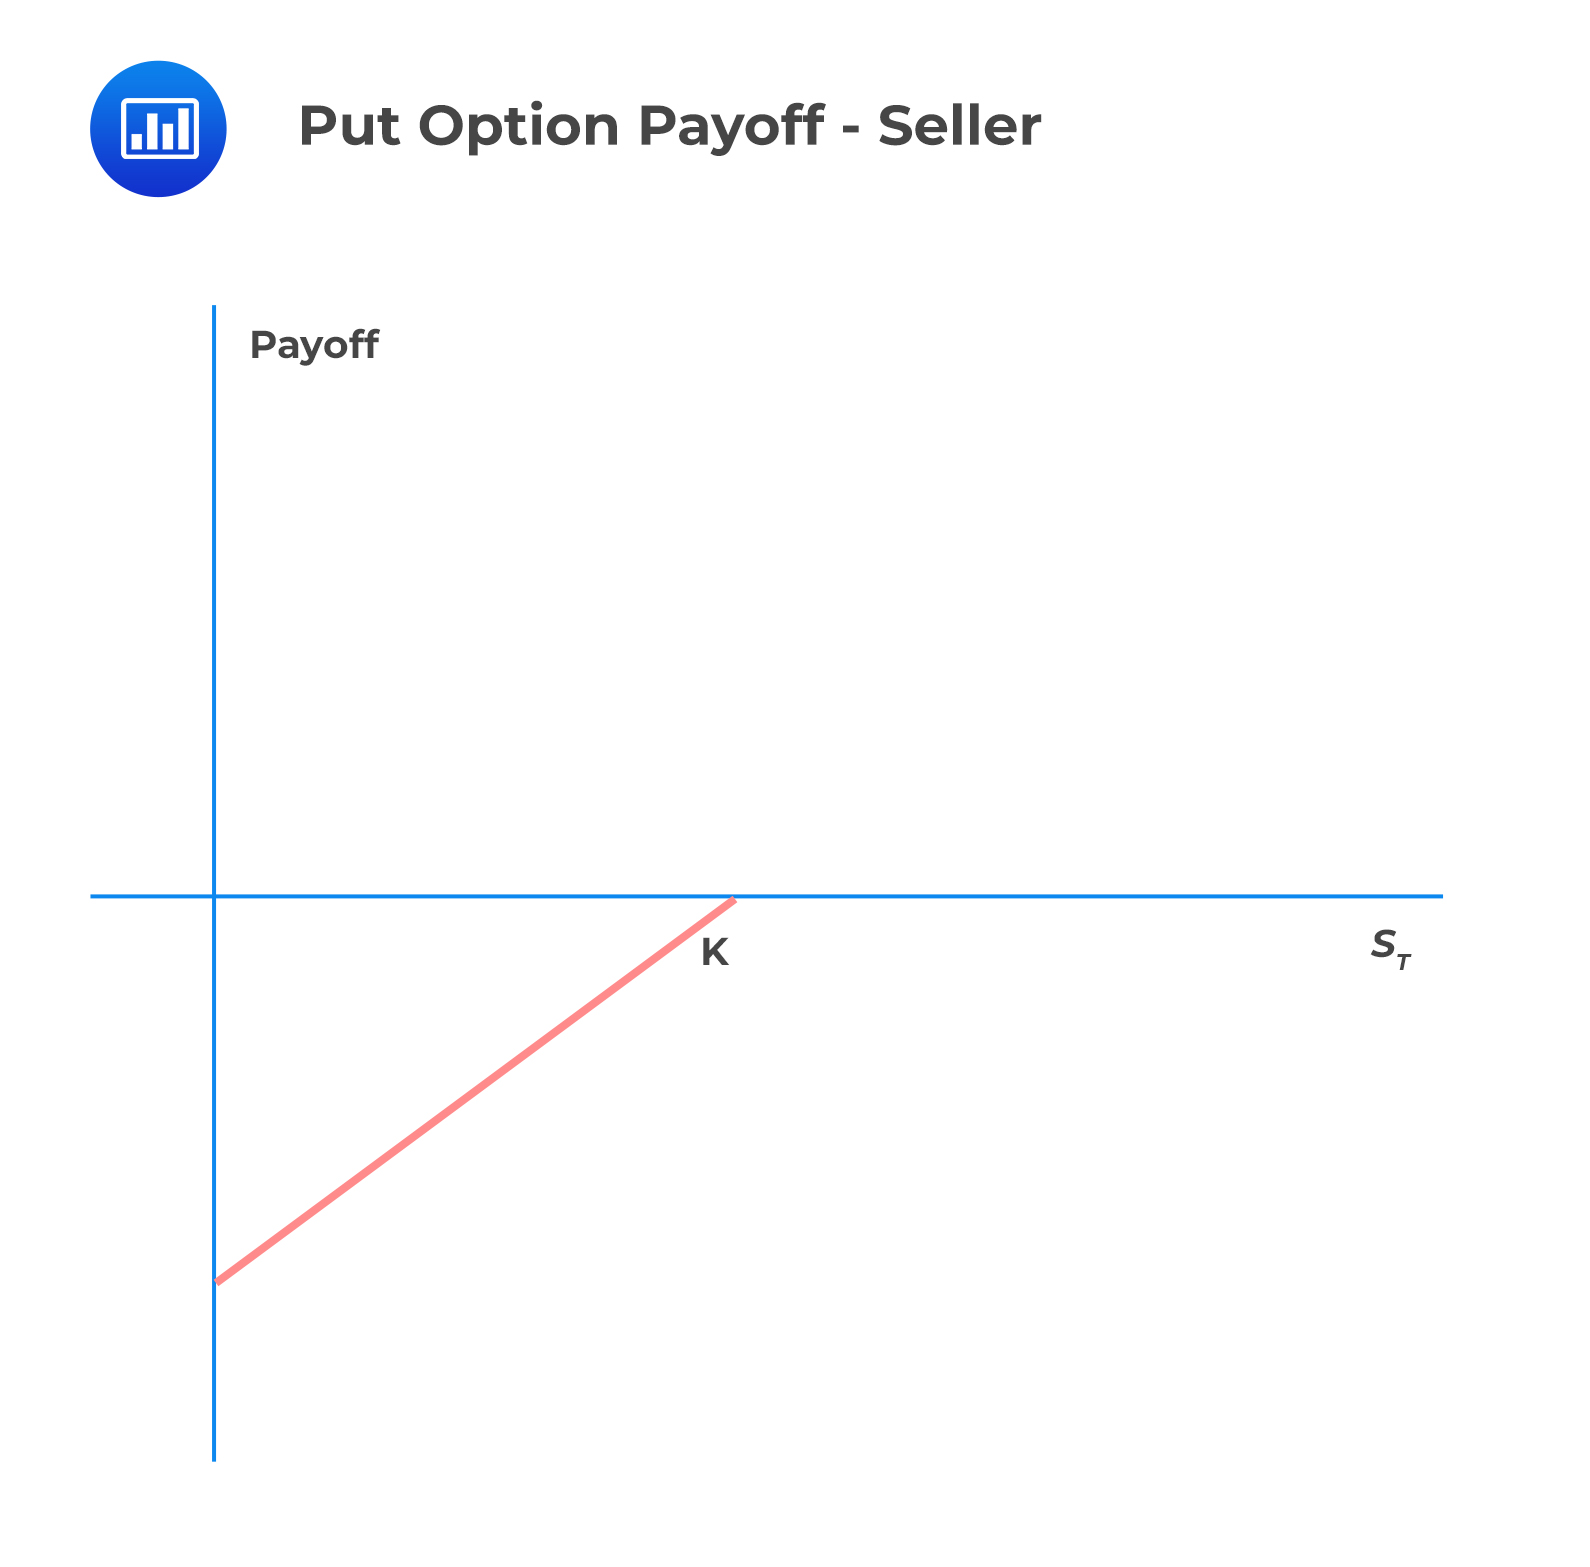 Put Option Payoff - Seller